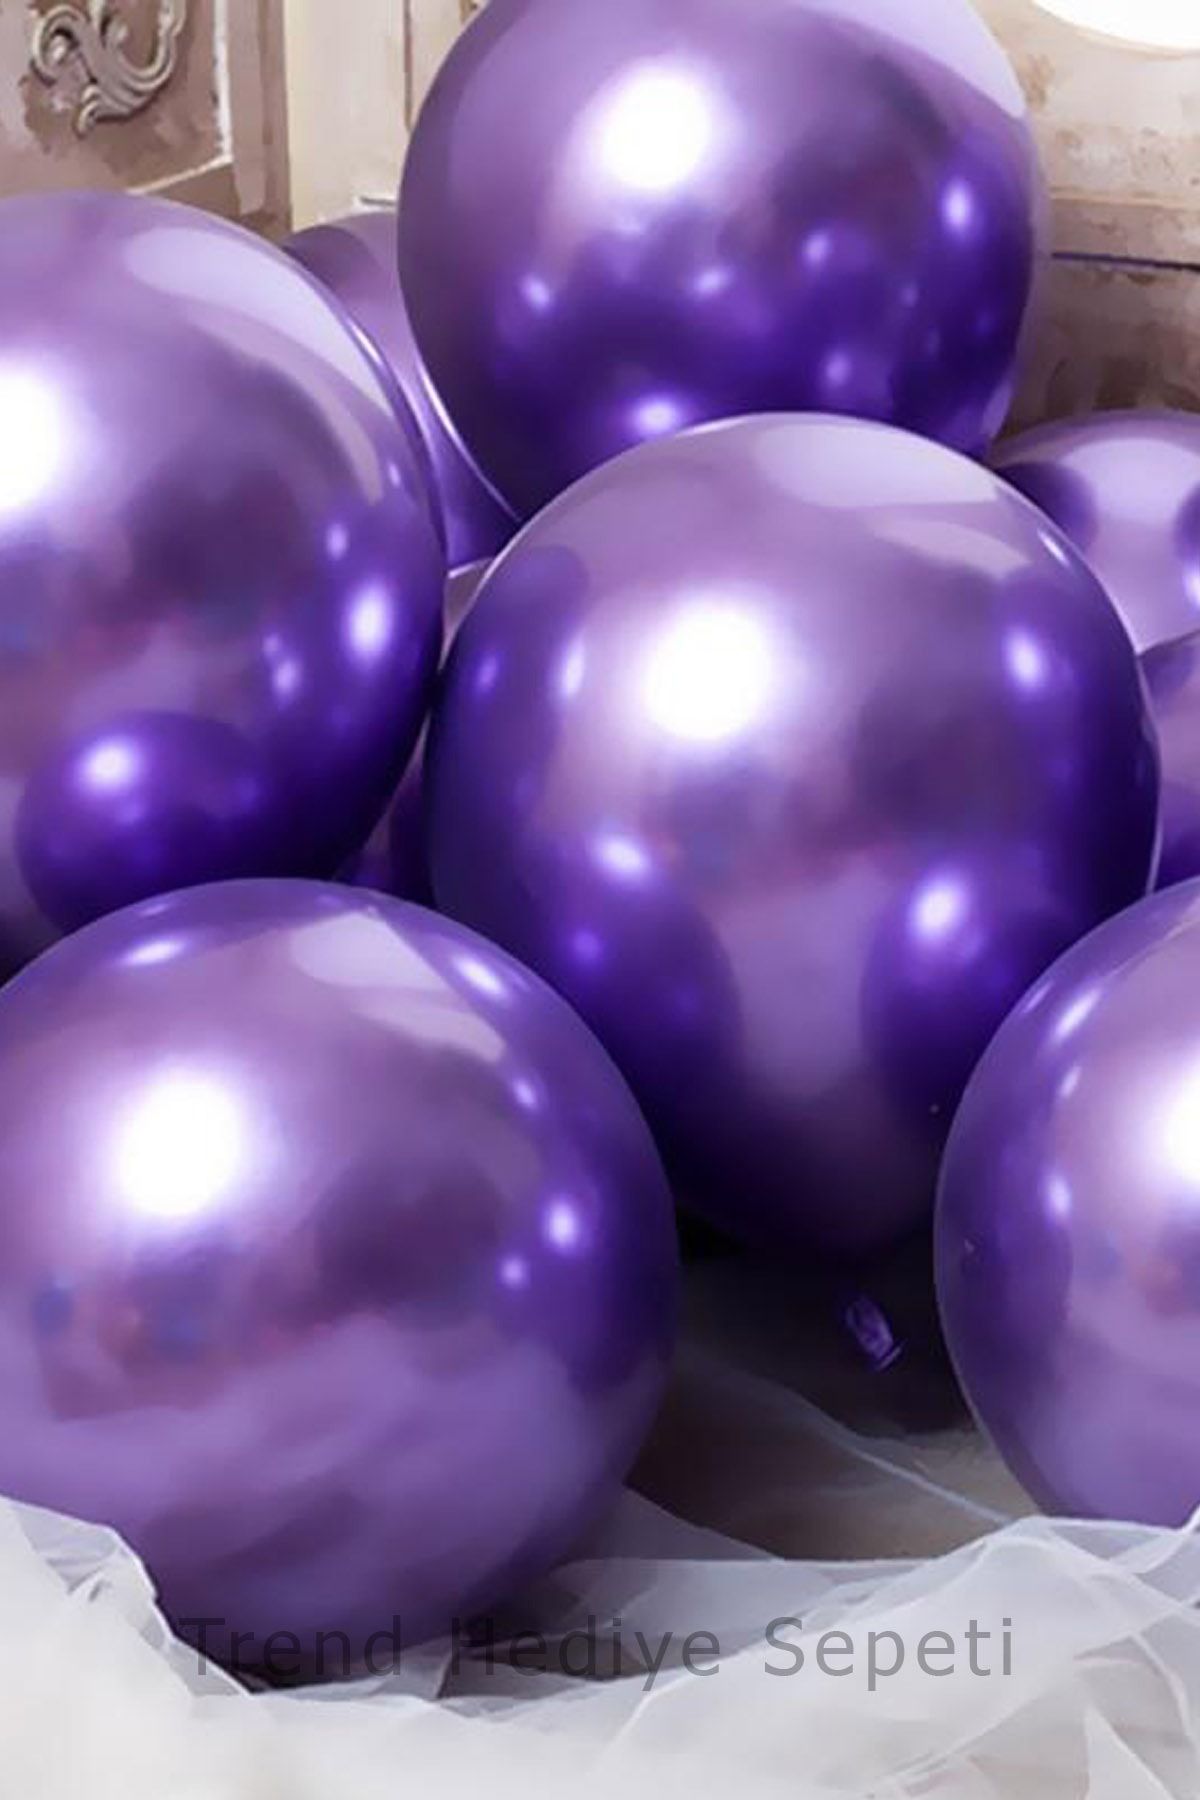 Ballon Violet Miroir Chrome